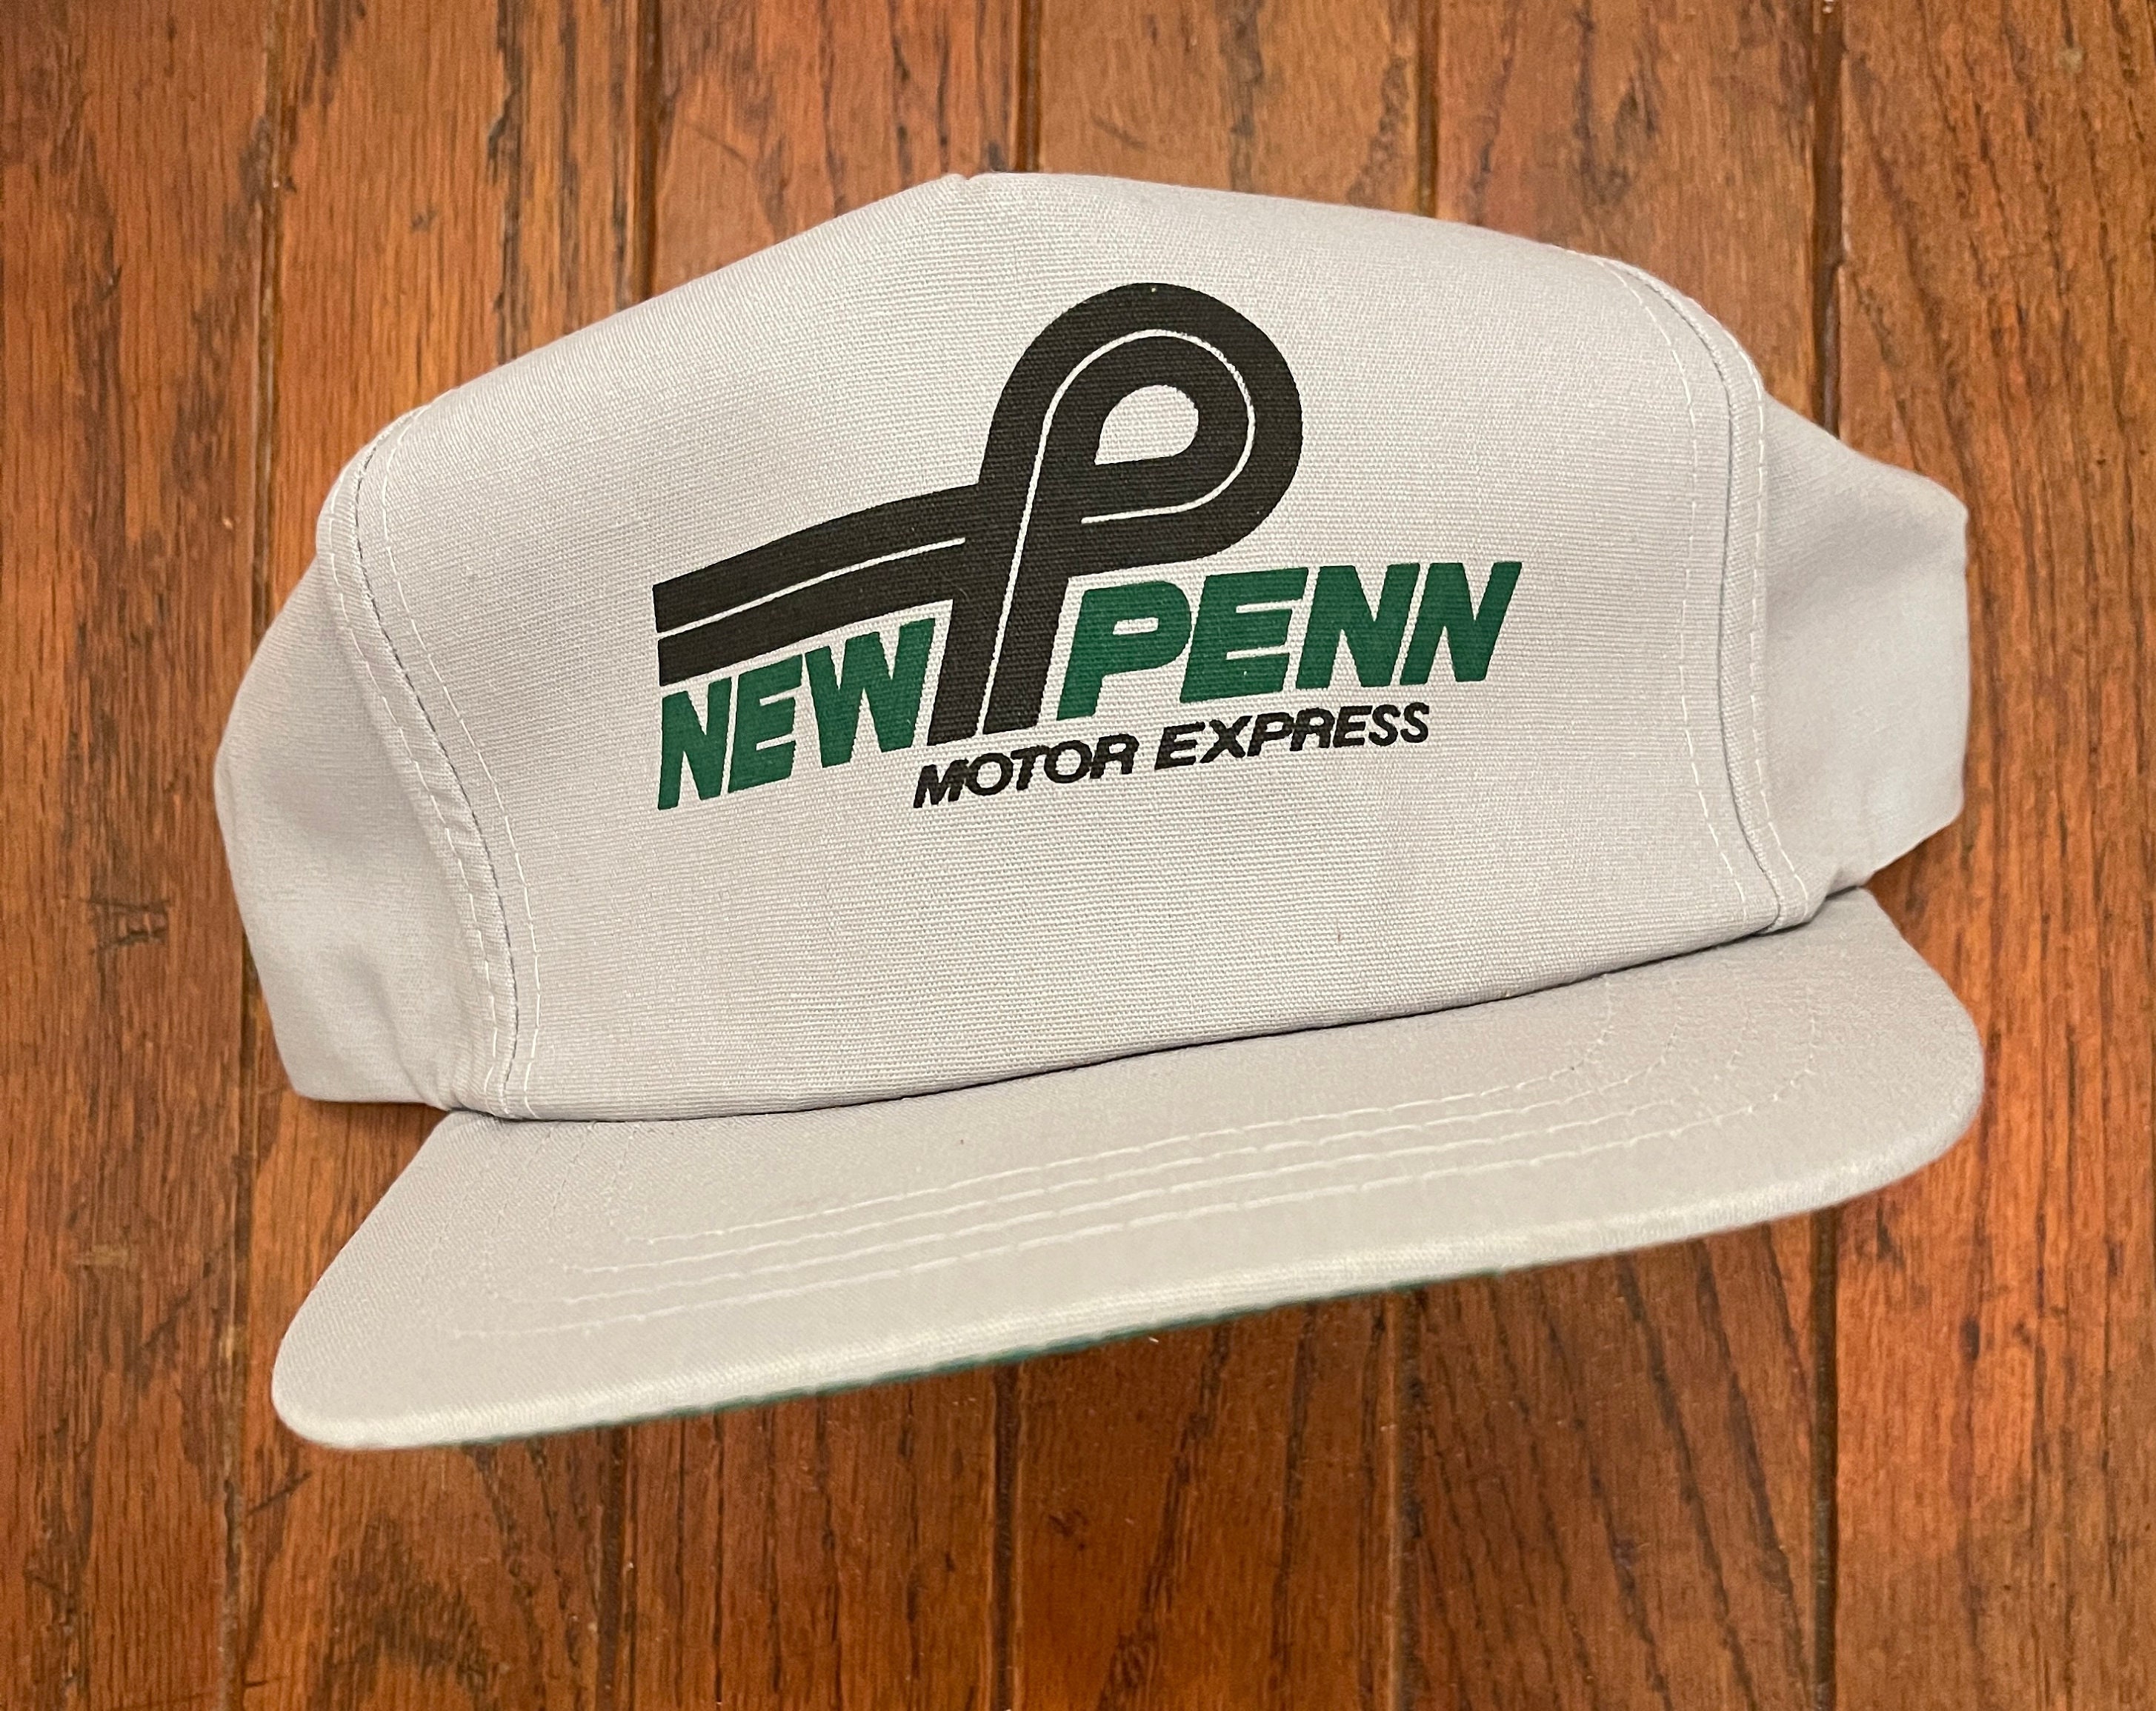 Vintage 80s 90s New Penn Motor Express Snapback Hat Baseball Cap